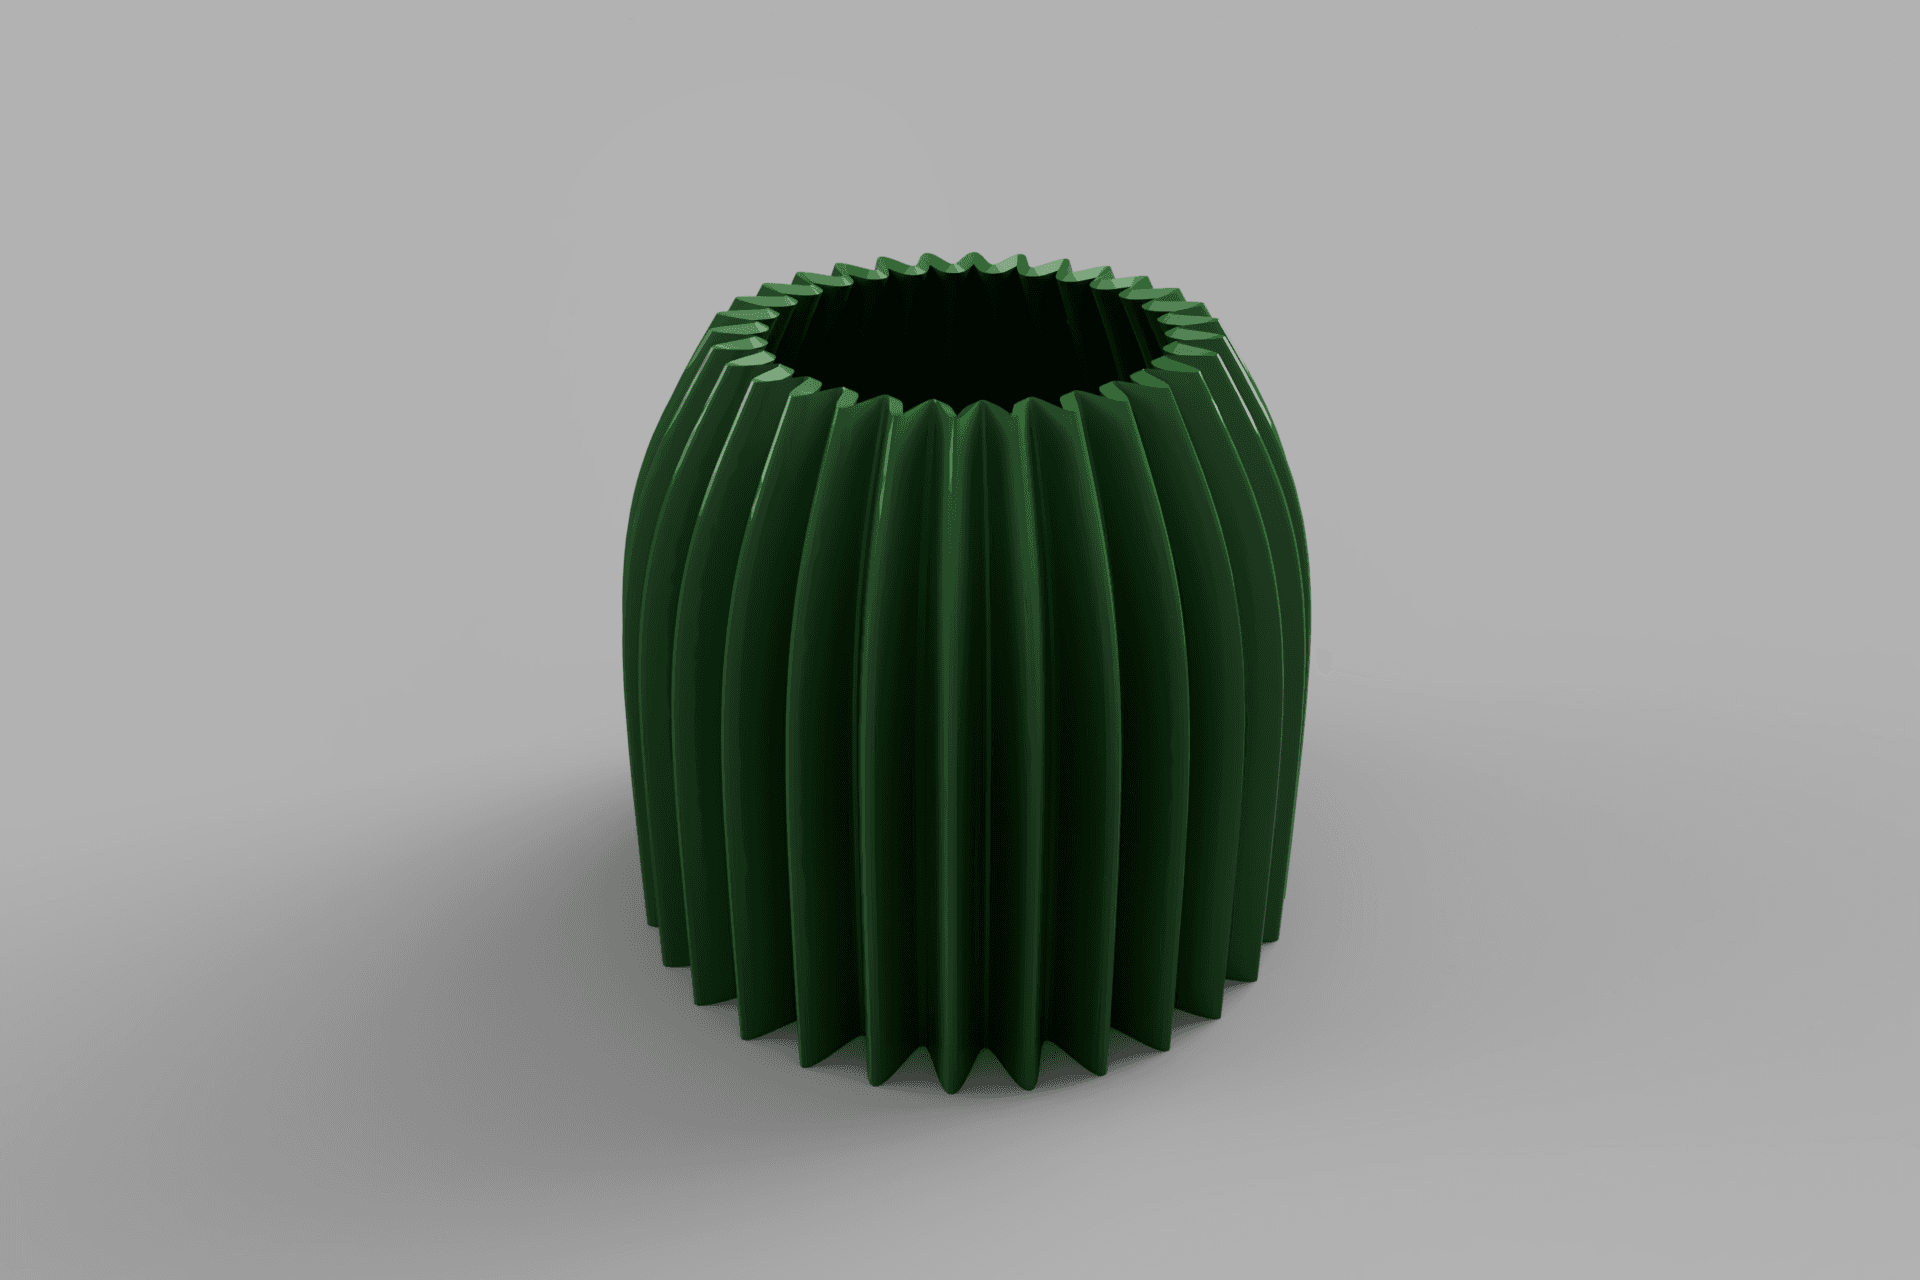 New Cactus Pencil Holder / Vase 3d model